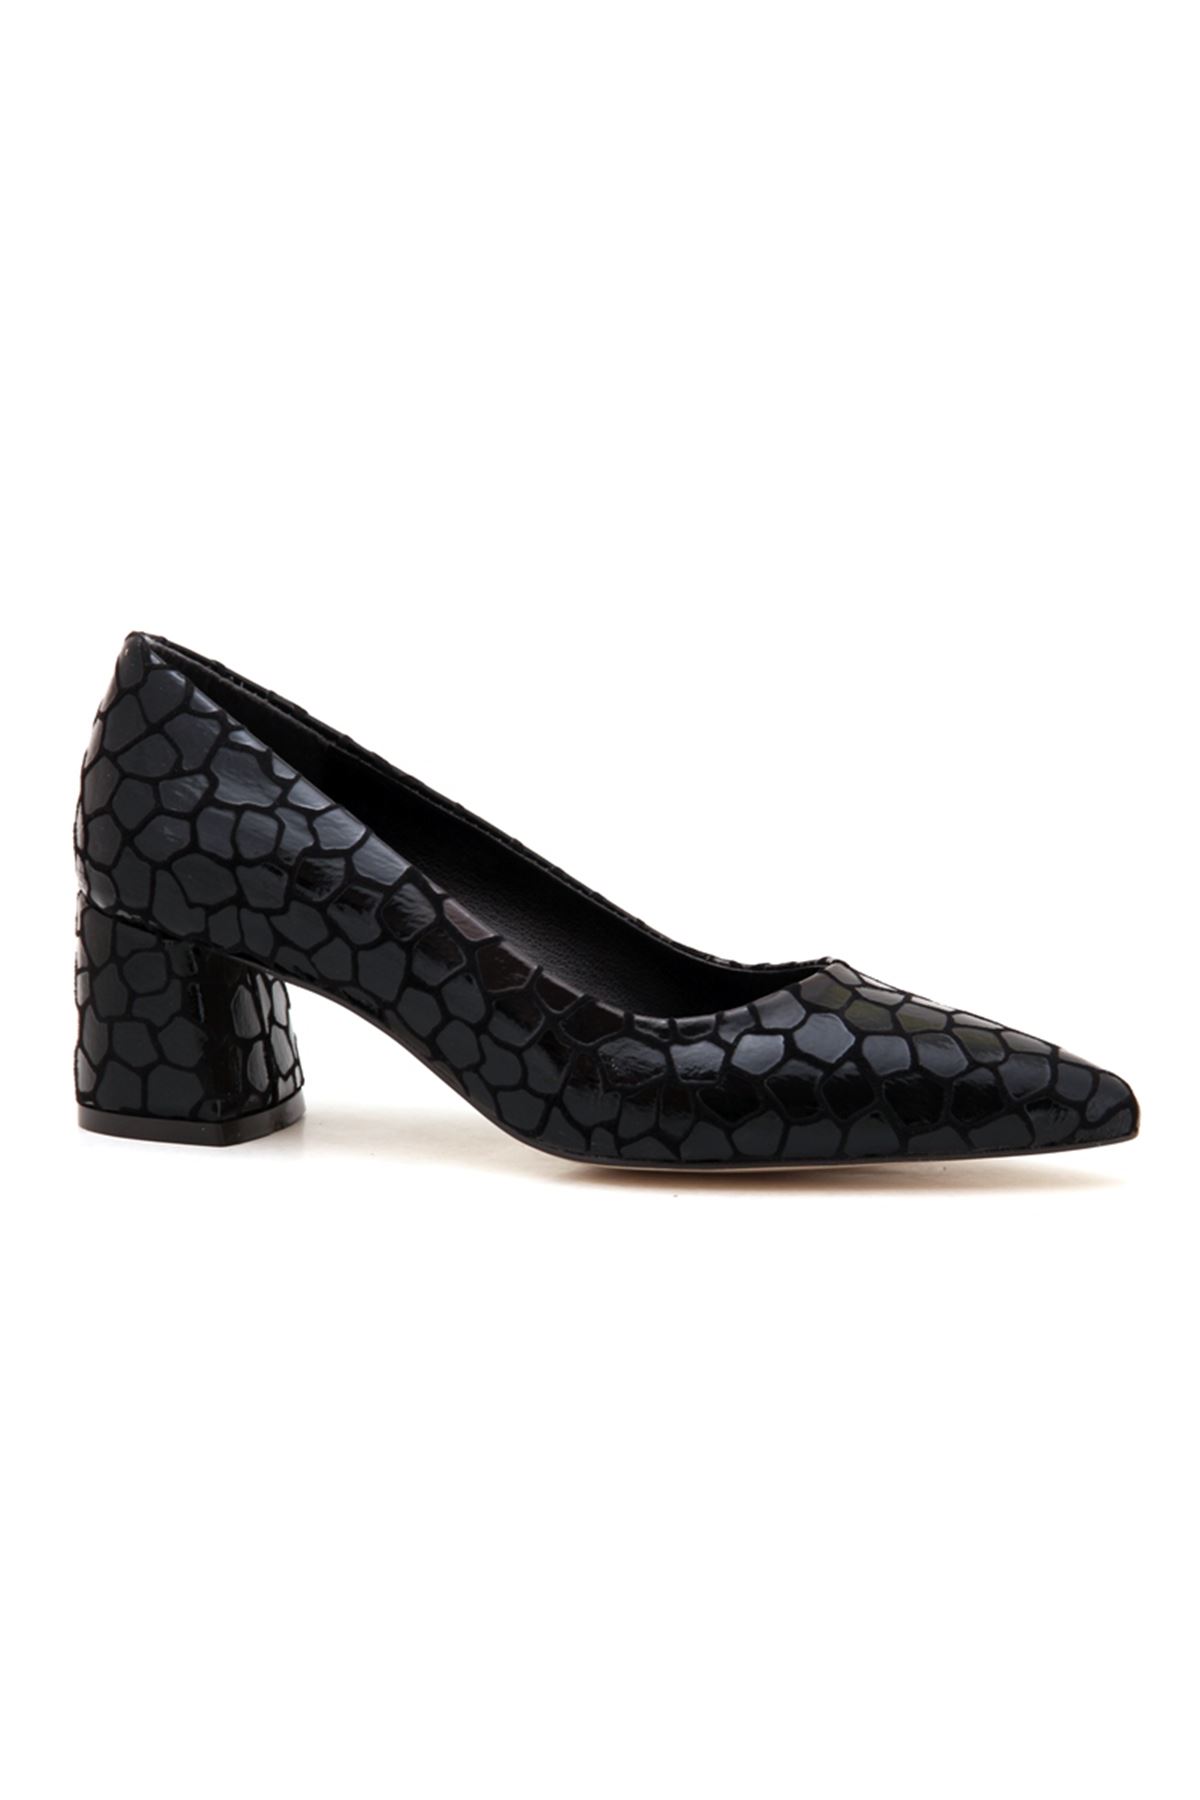 L&L 315 Topuklu Kadın Ayakkabı - Siyah